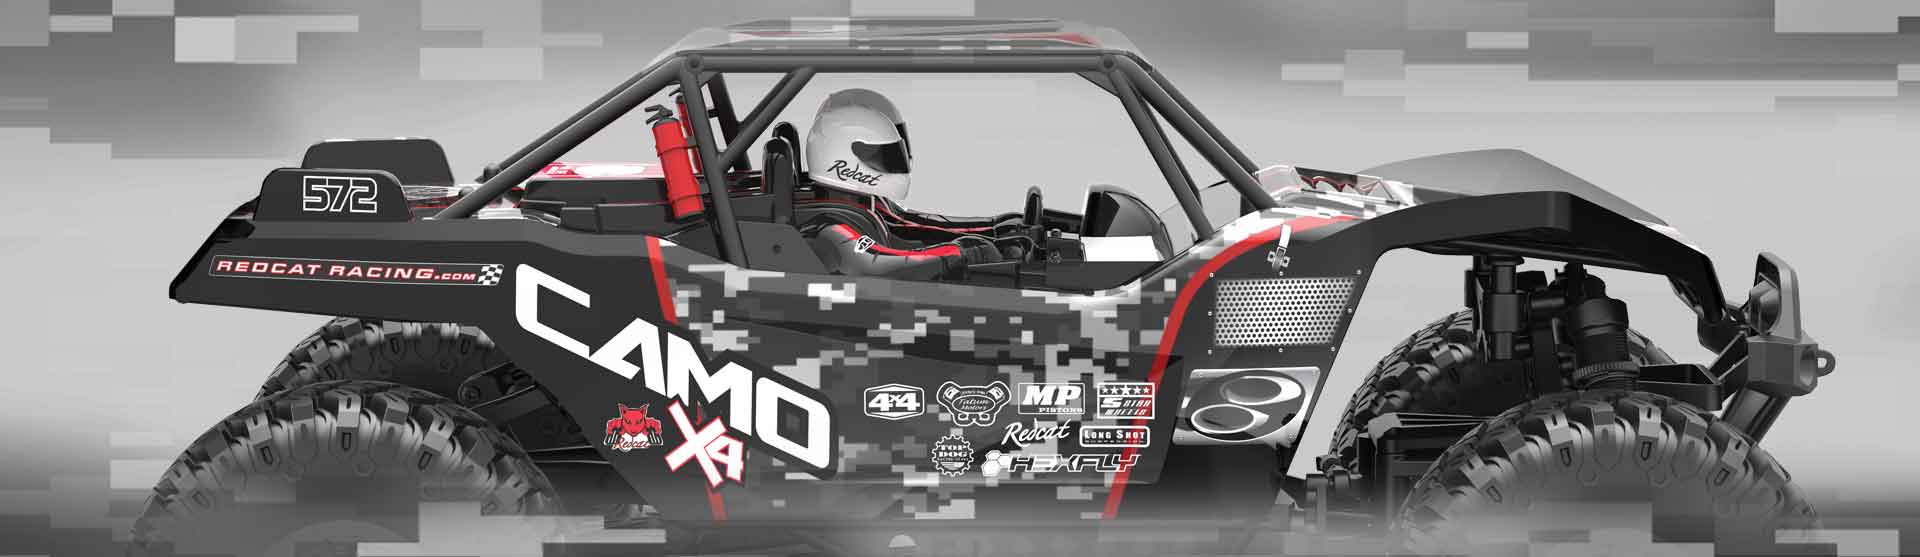 Redcat Racing Camo X4 Rock Racer